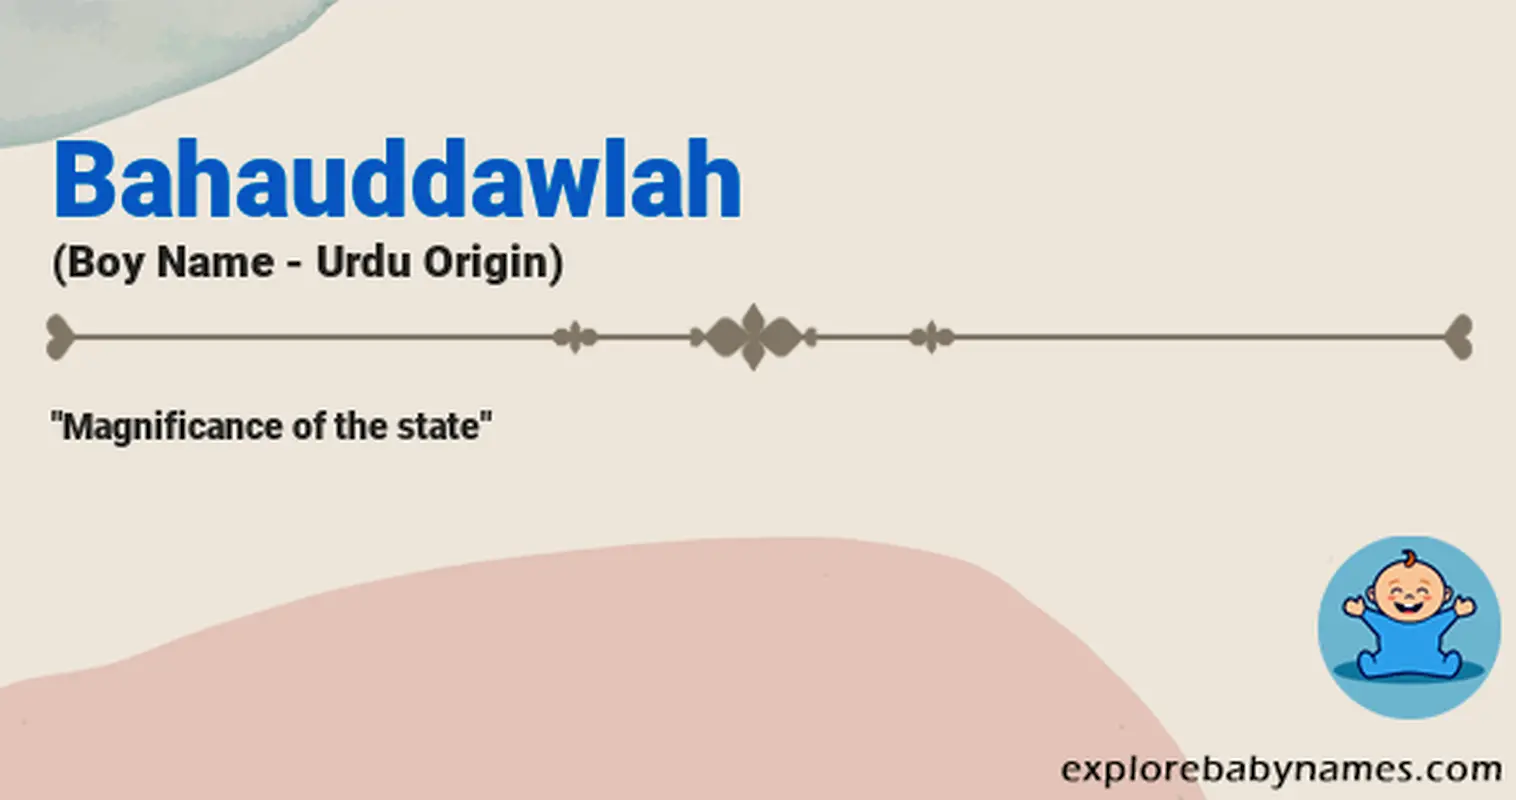 Meaning of Bahauddawlah